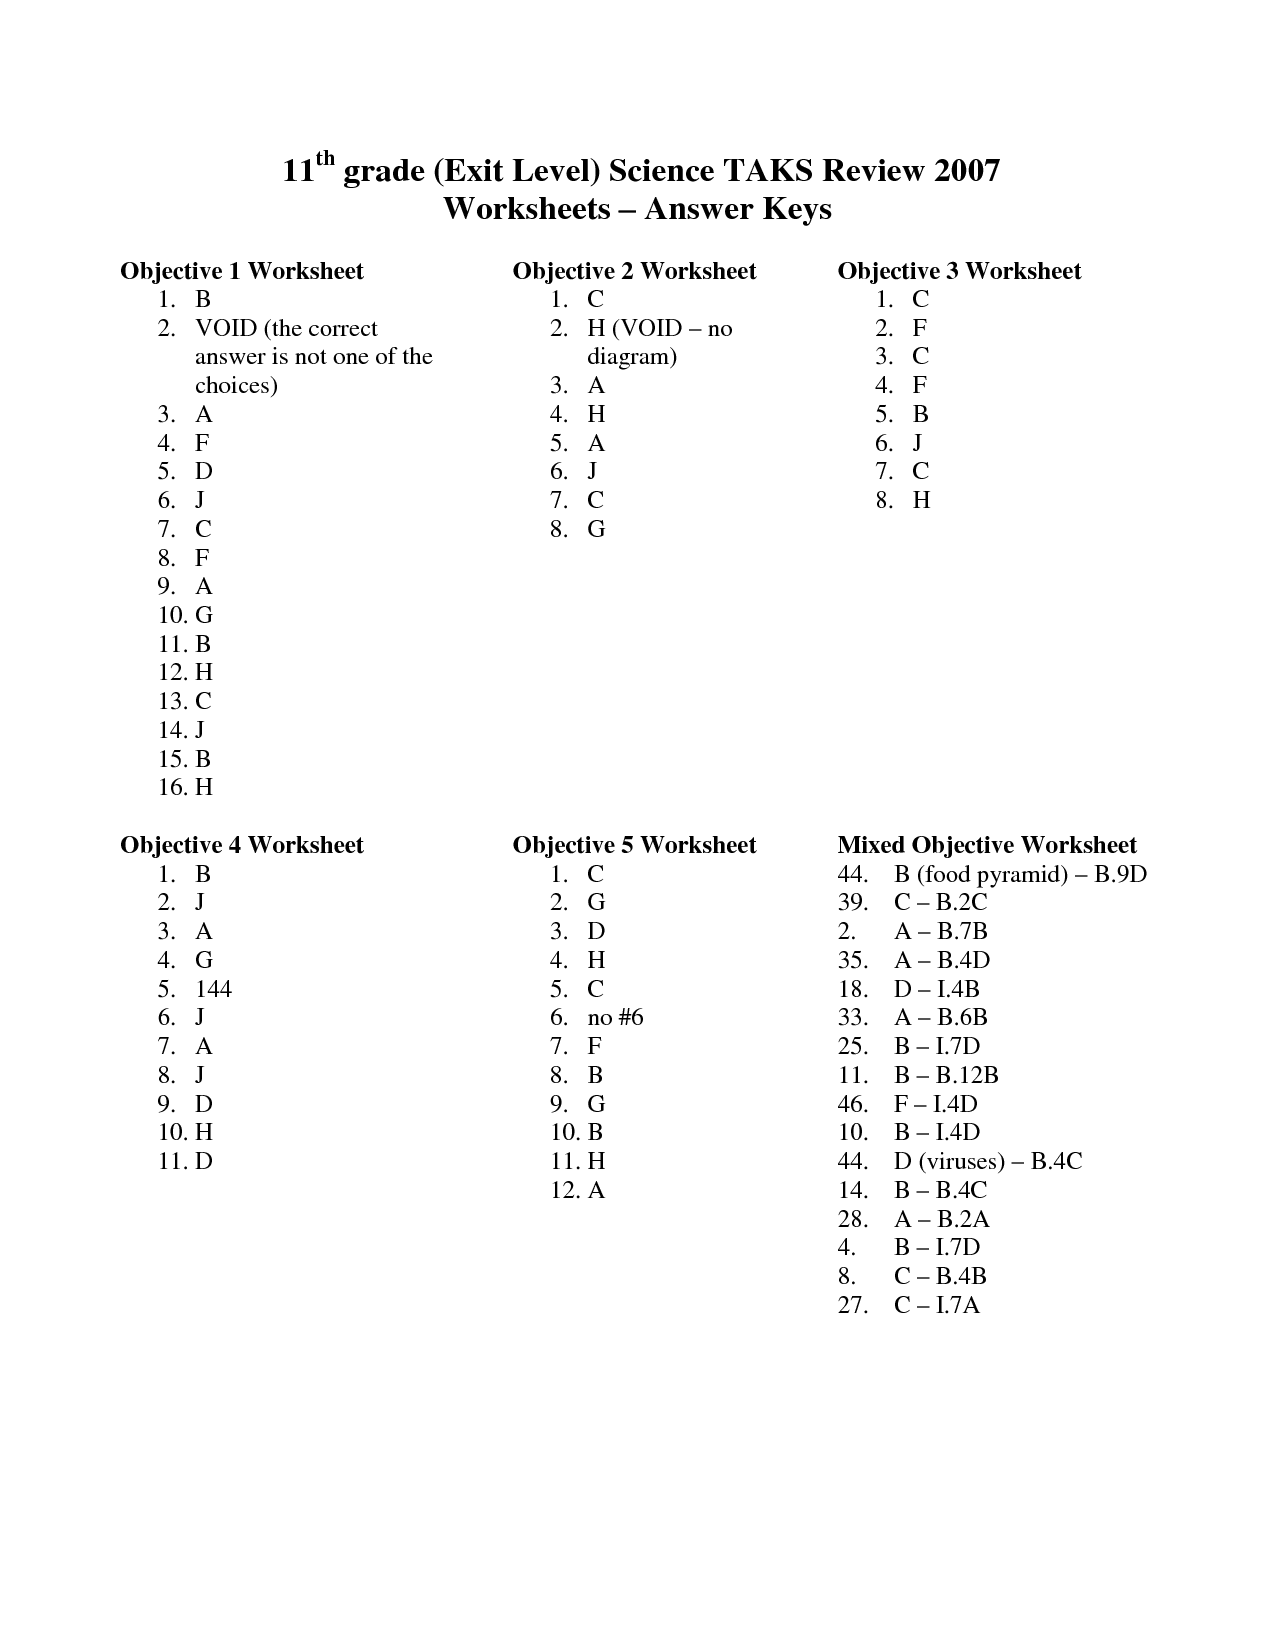 11th Grade Chemistry Worksheets